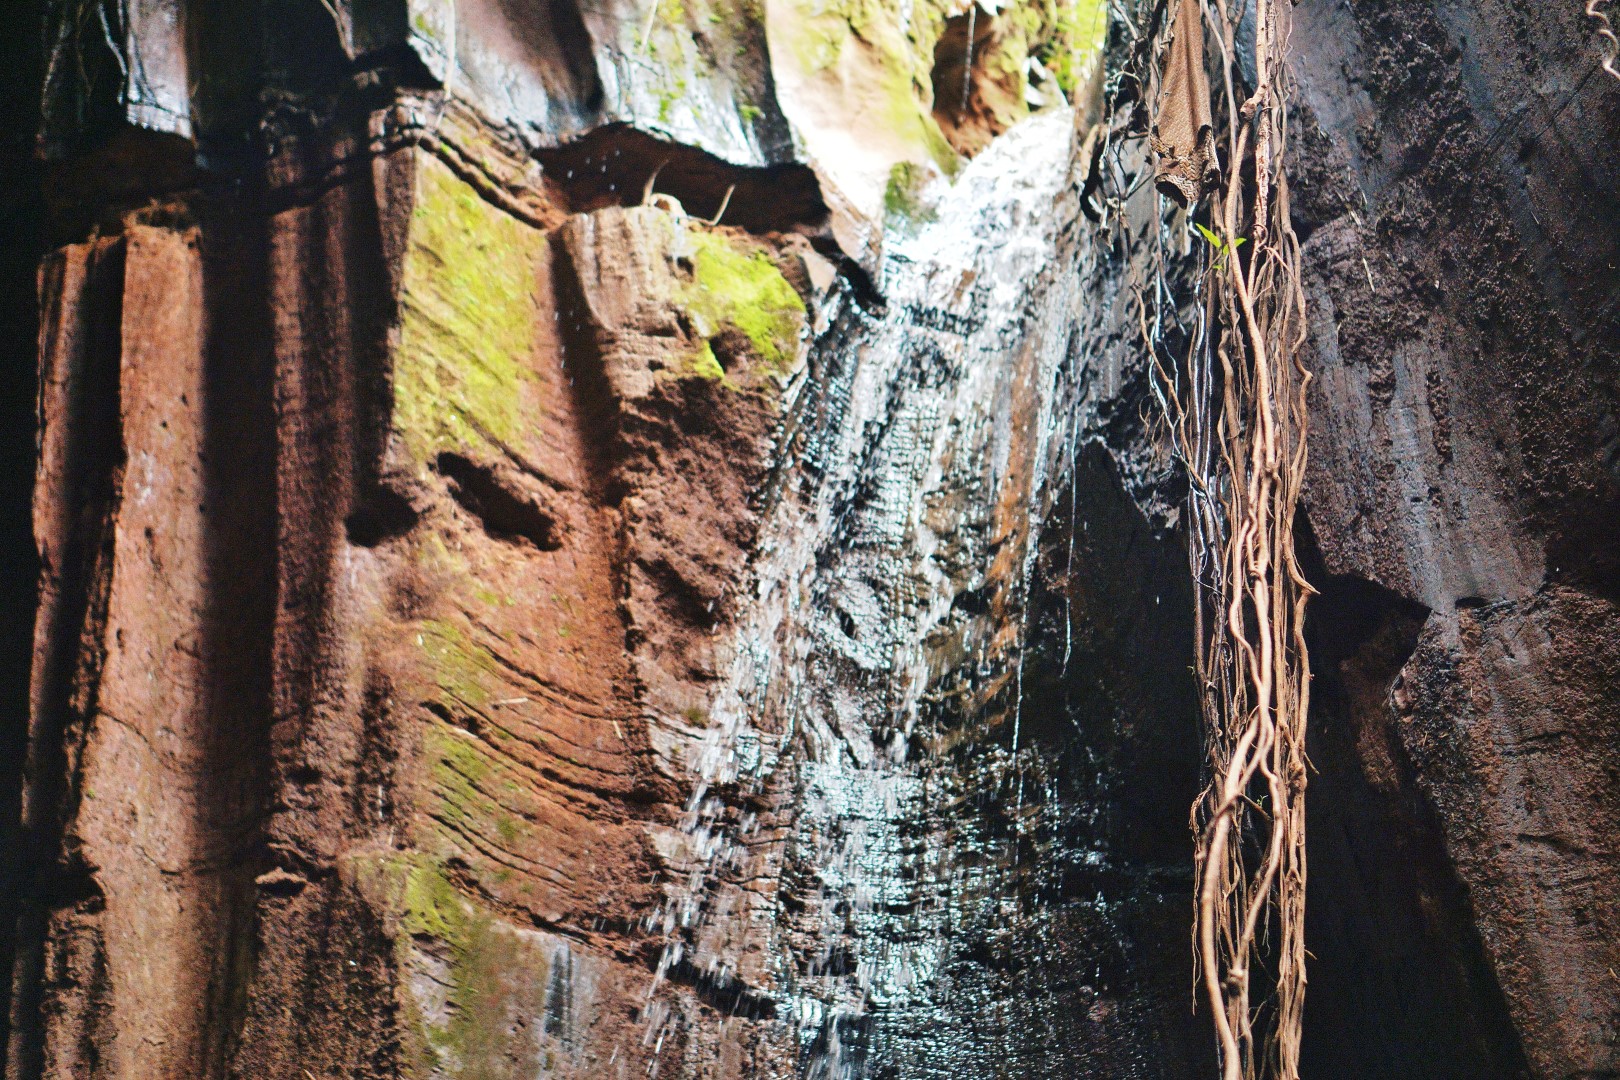 Ngwo cave and waterfall in Enugu